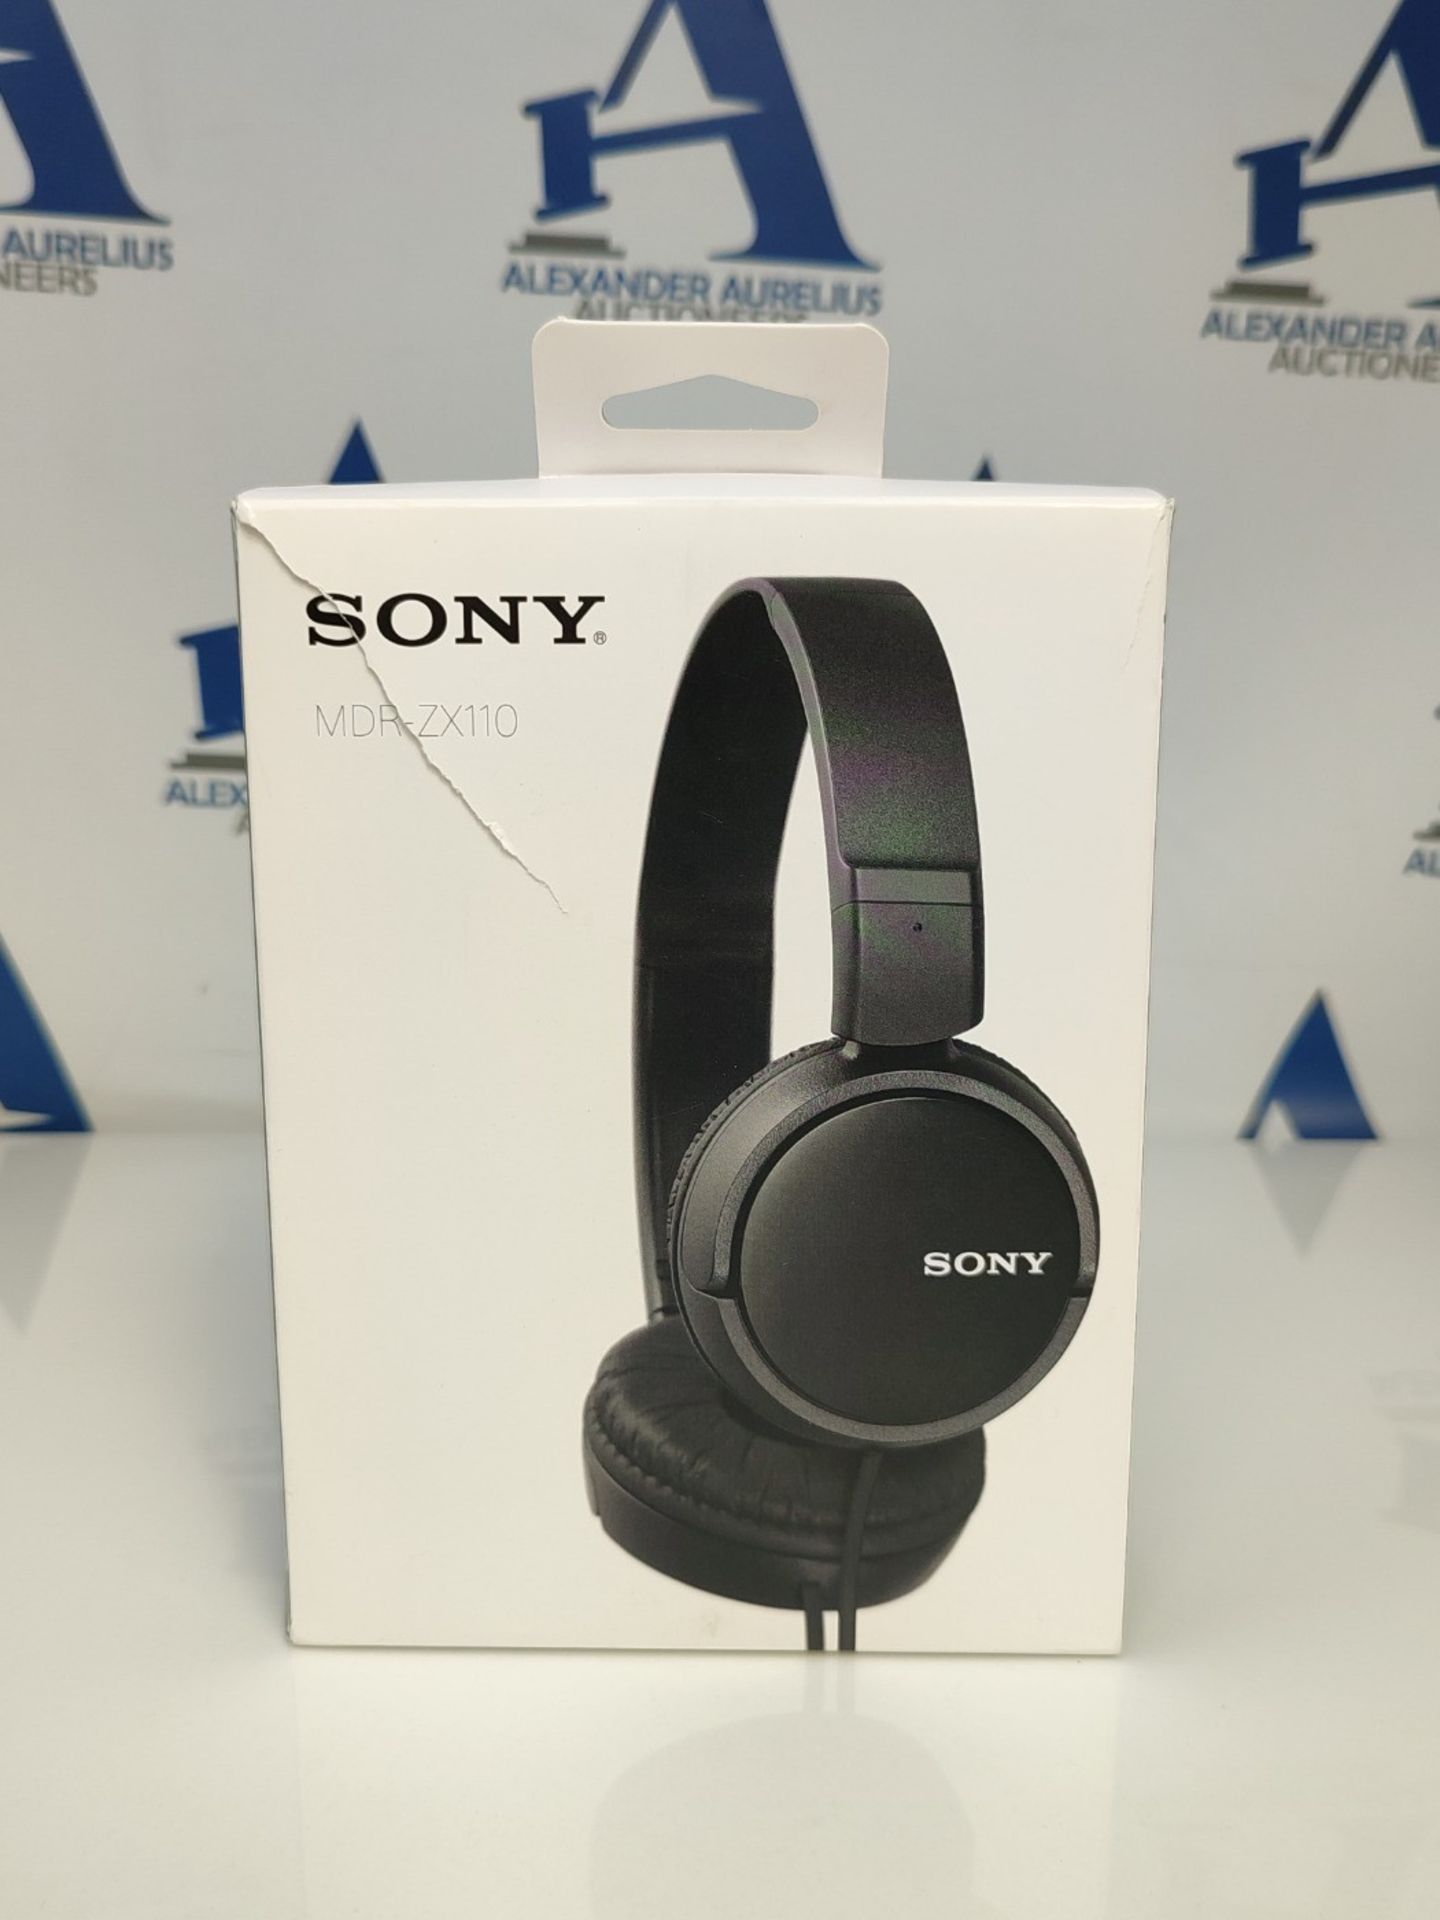 Sony MDR-ZX110 foldable headband headphones, black, 25 - Image 2 of 3